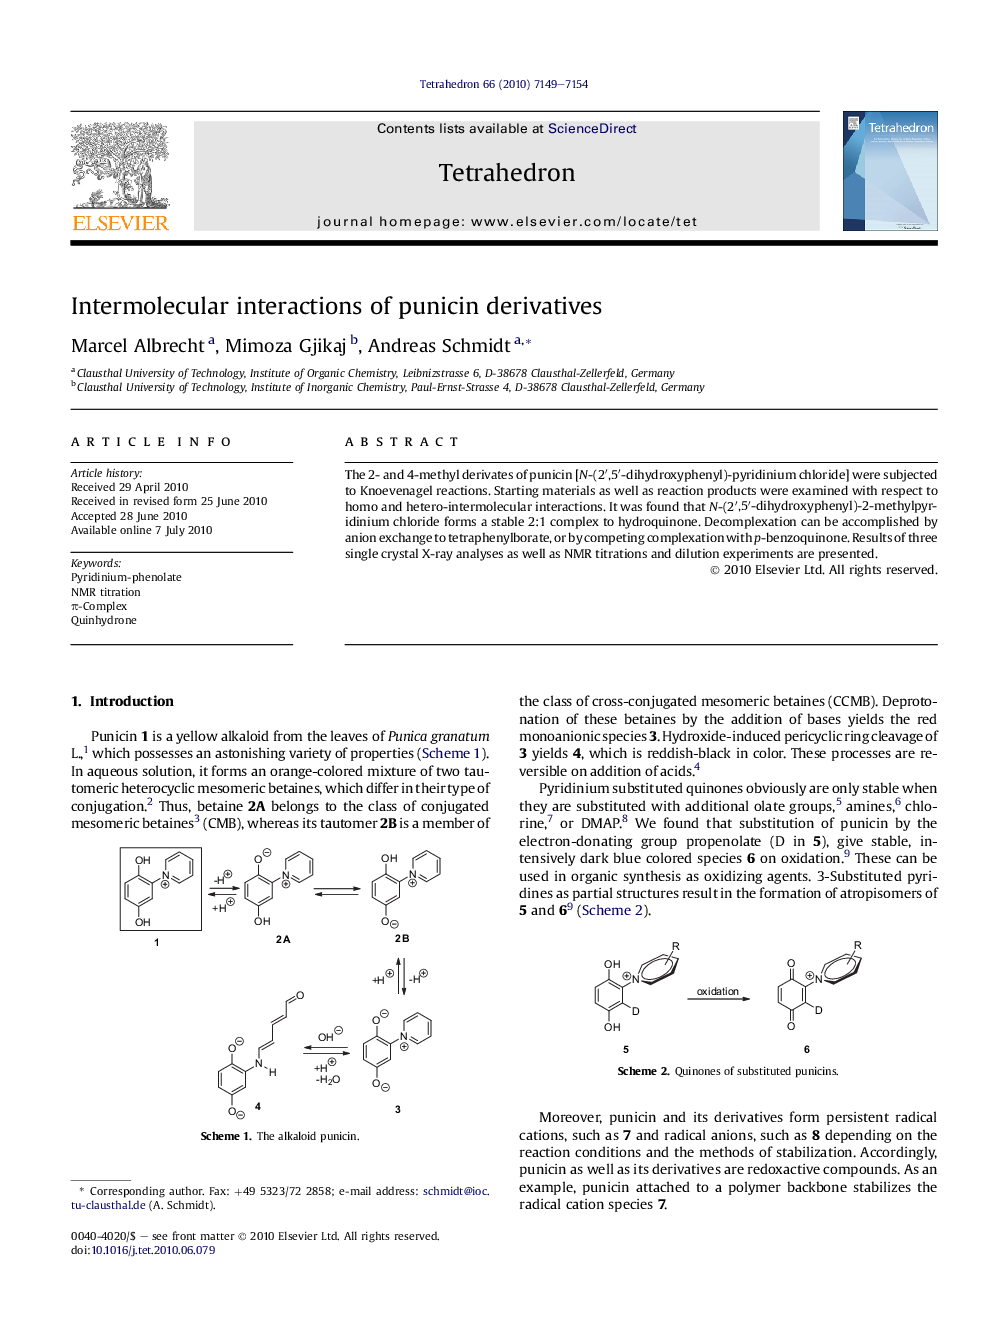 Intermolecular interactions of punicin derivatives